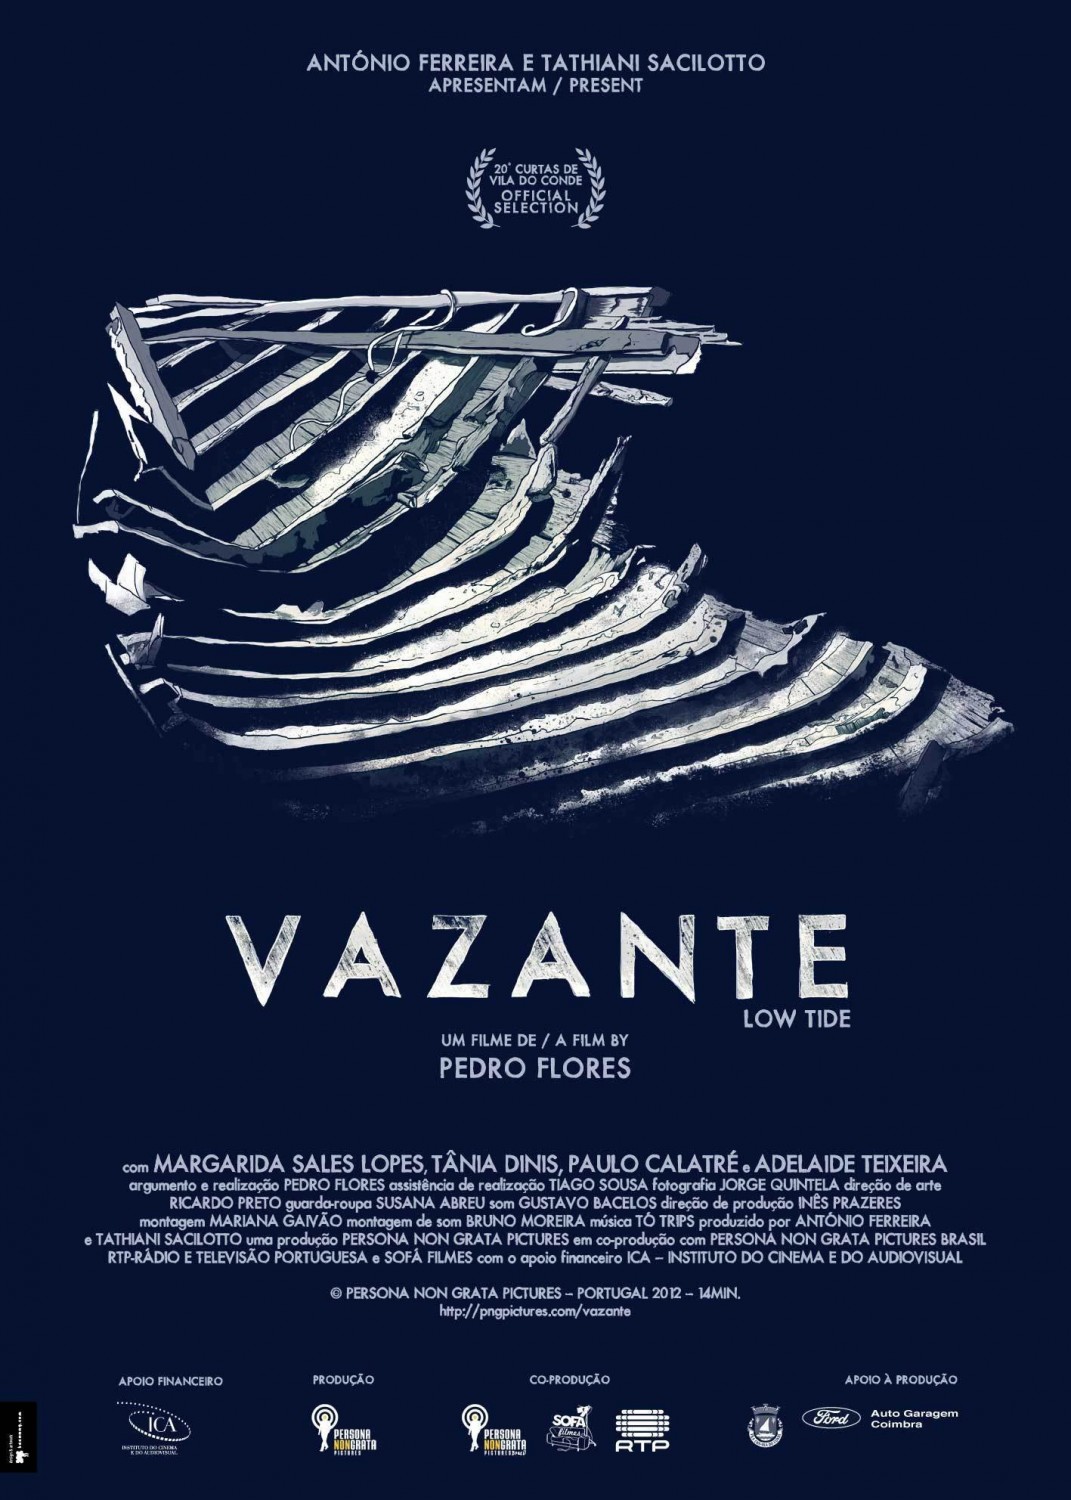 Extra Large Movie Poster Image for Vazante